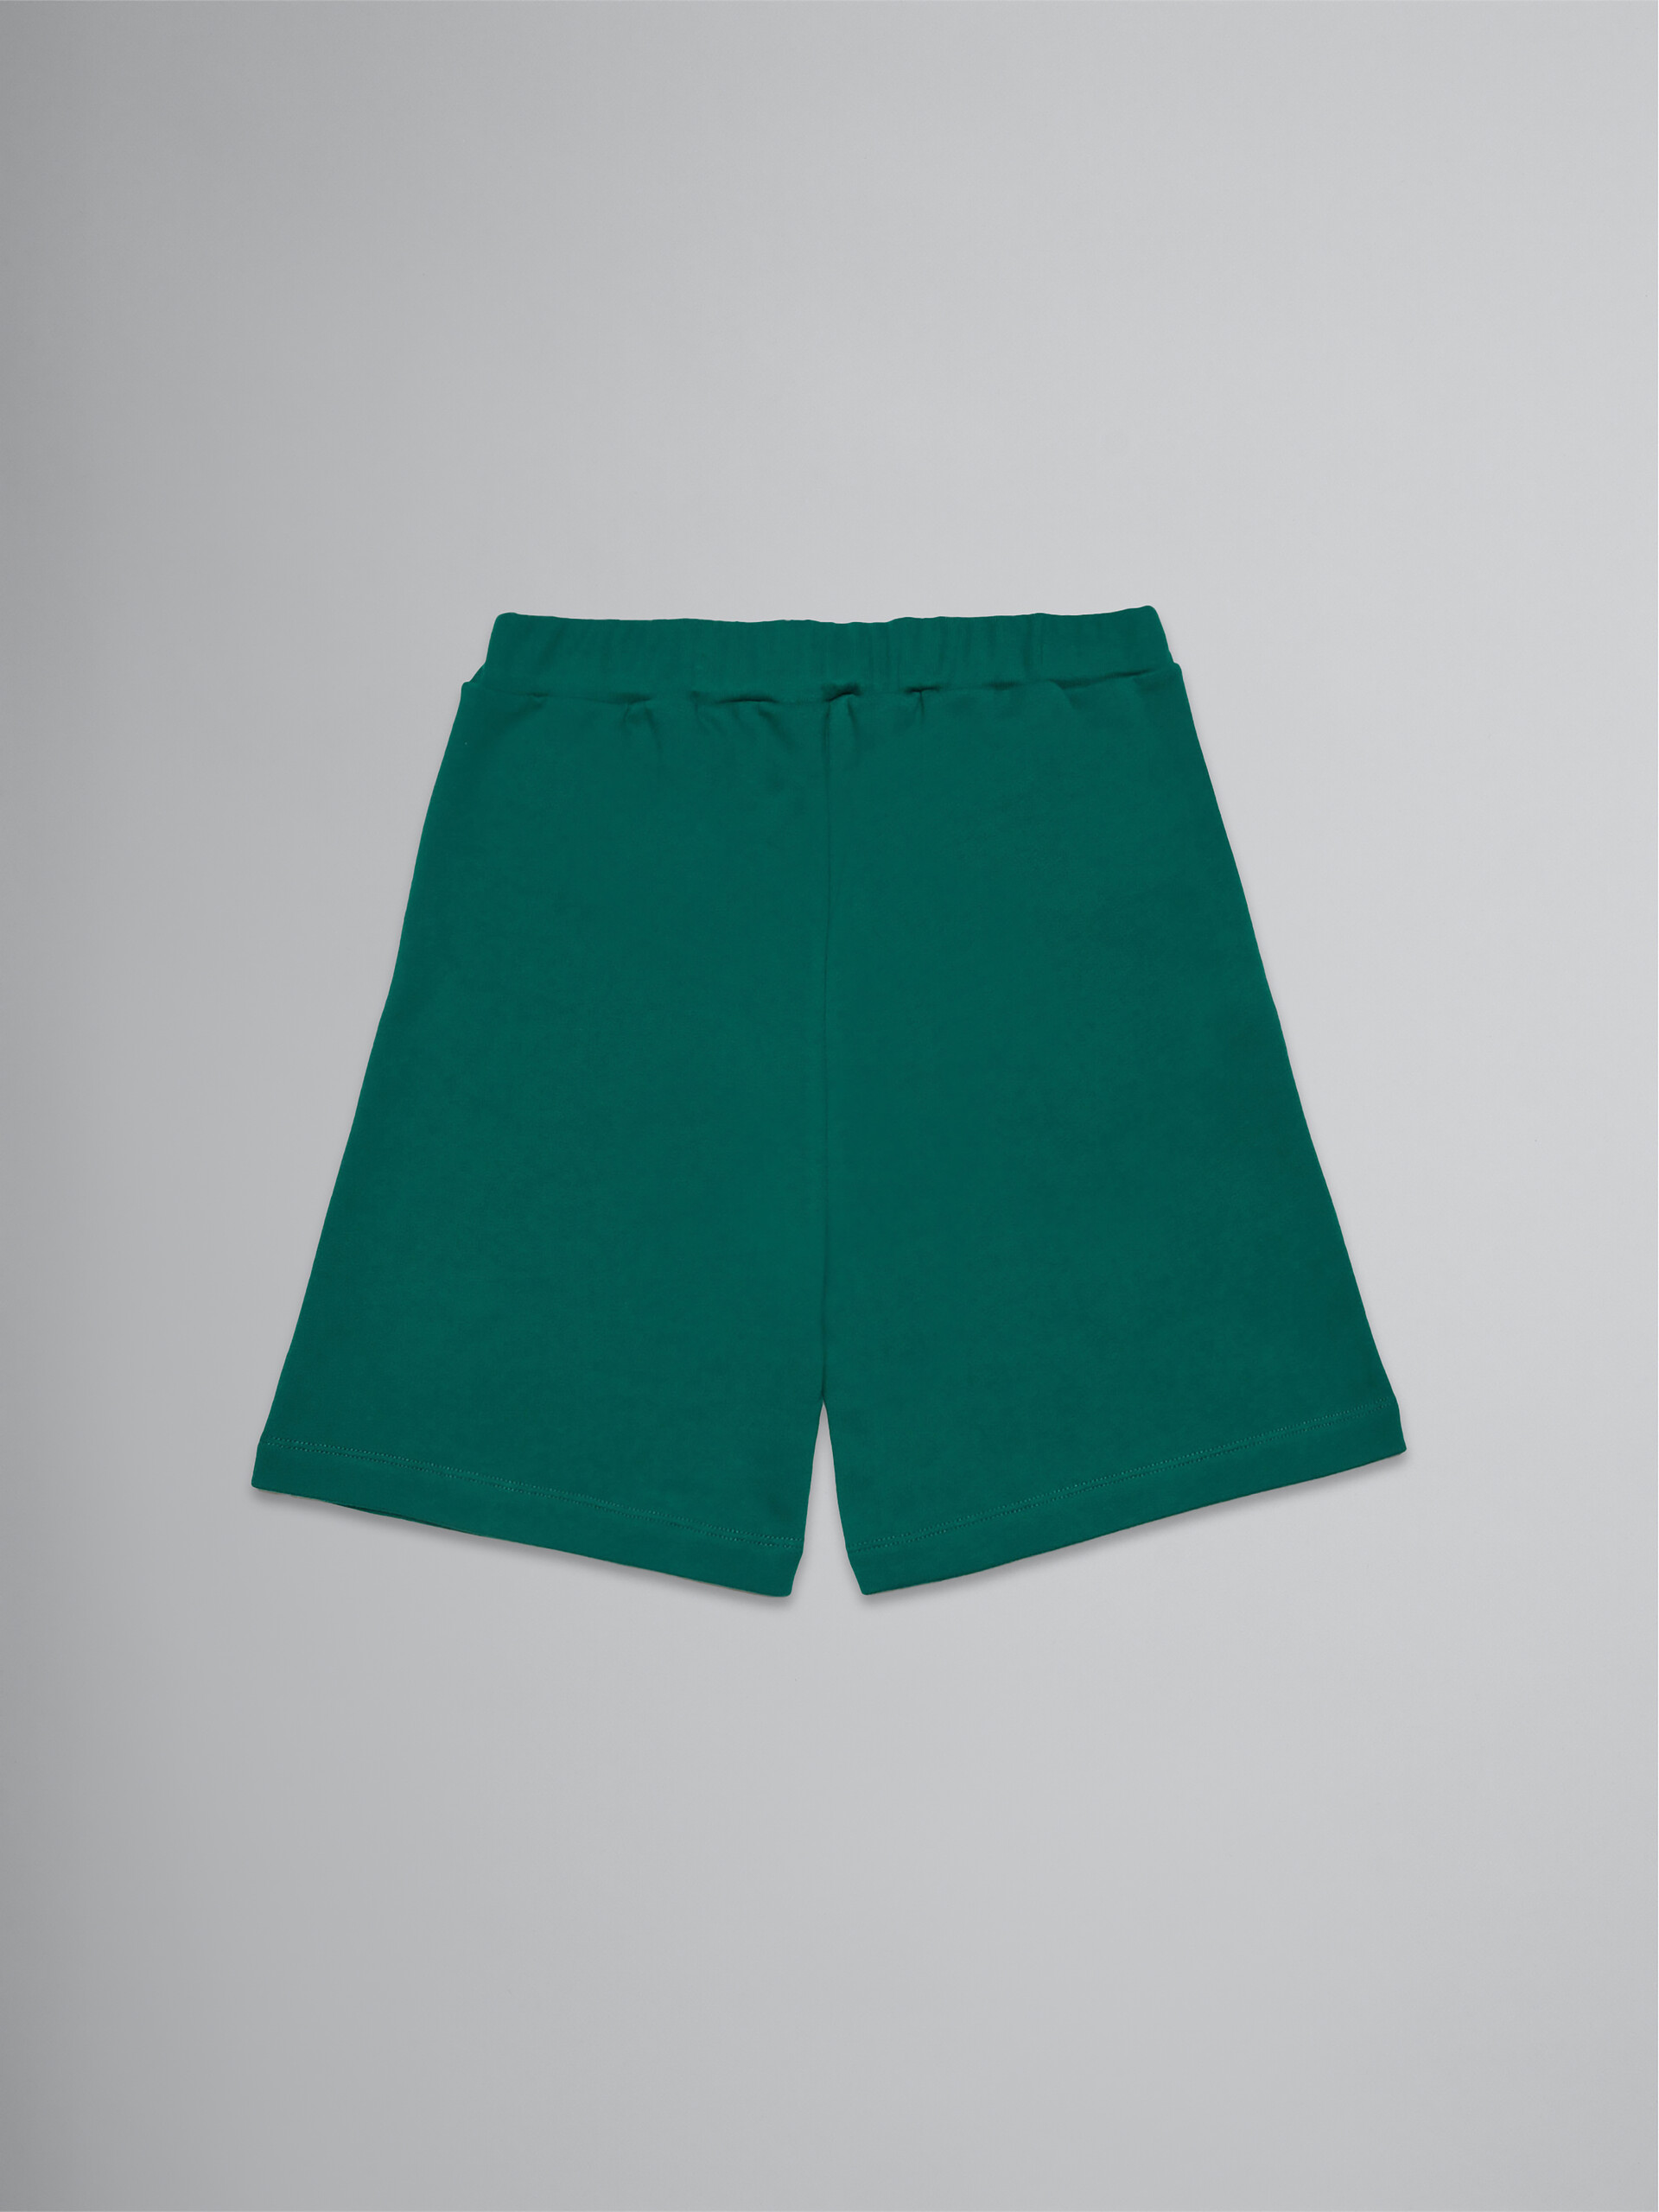 Grüne Fleece-Shorts mit Logo - Hosen - Image 2